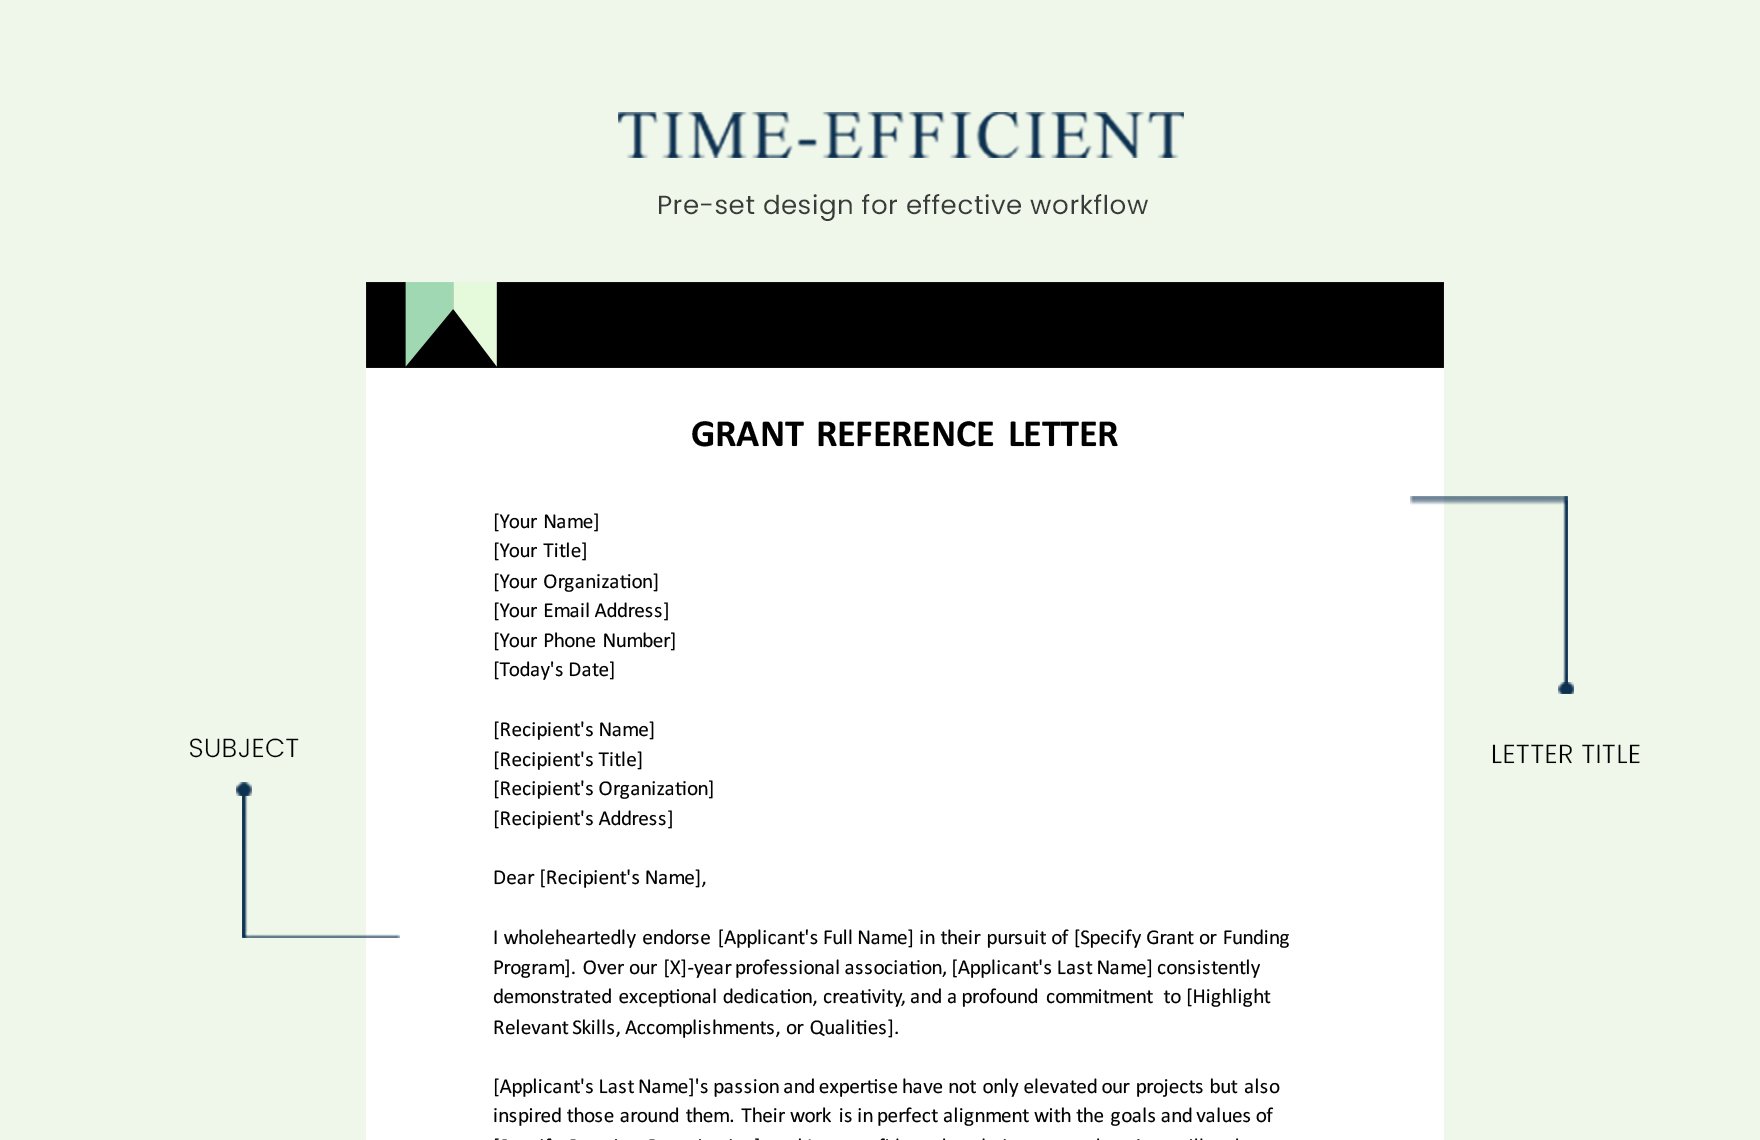 Grant Reference Letter